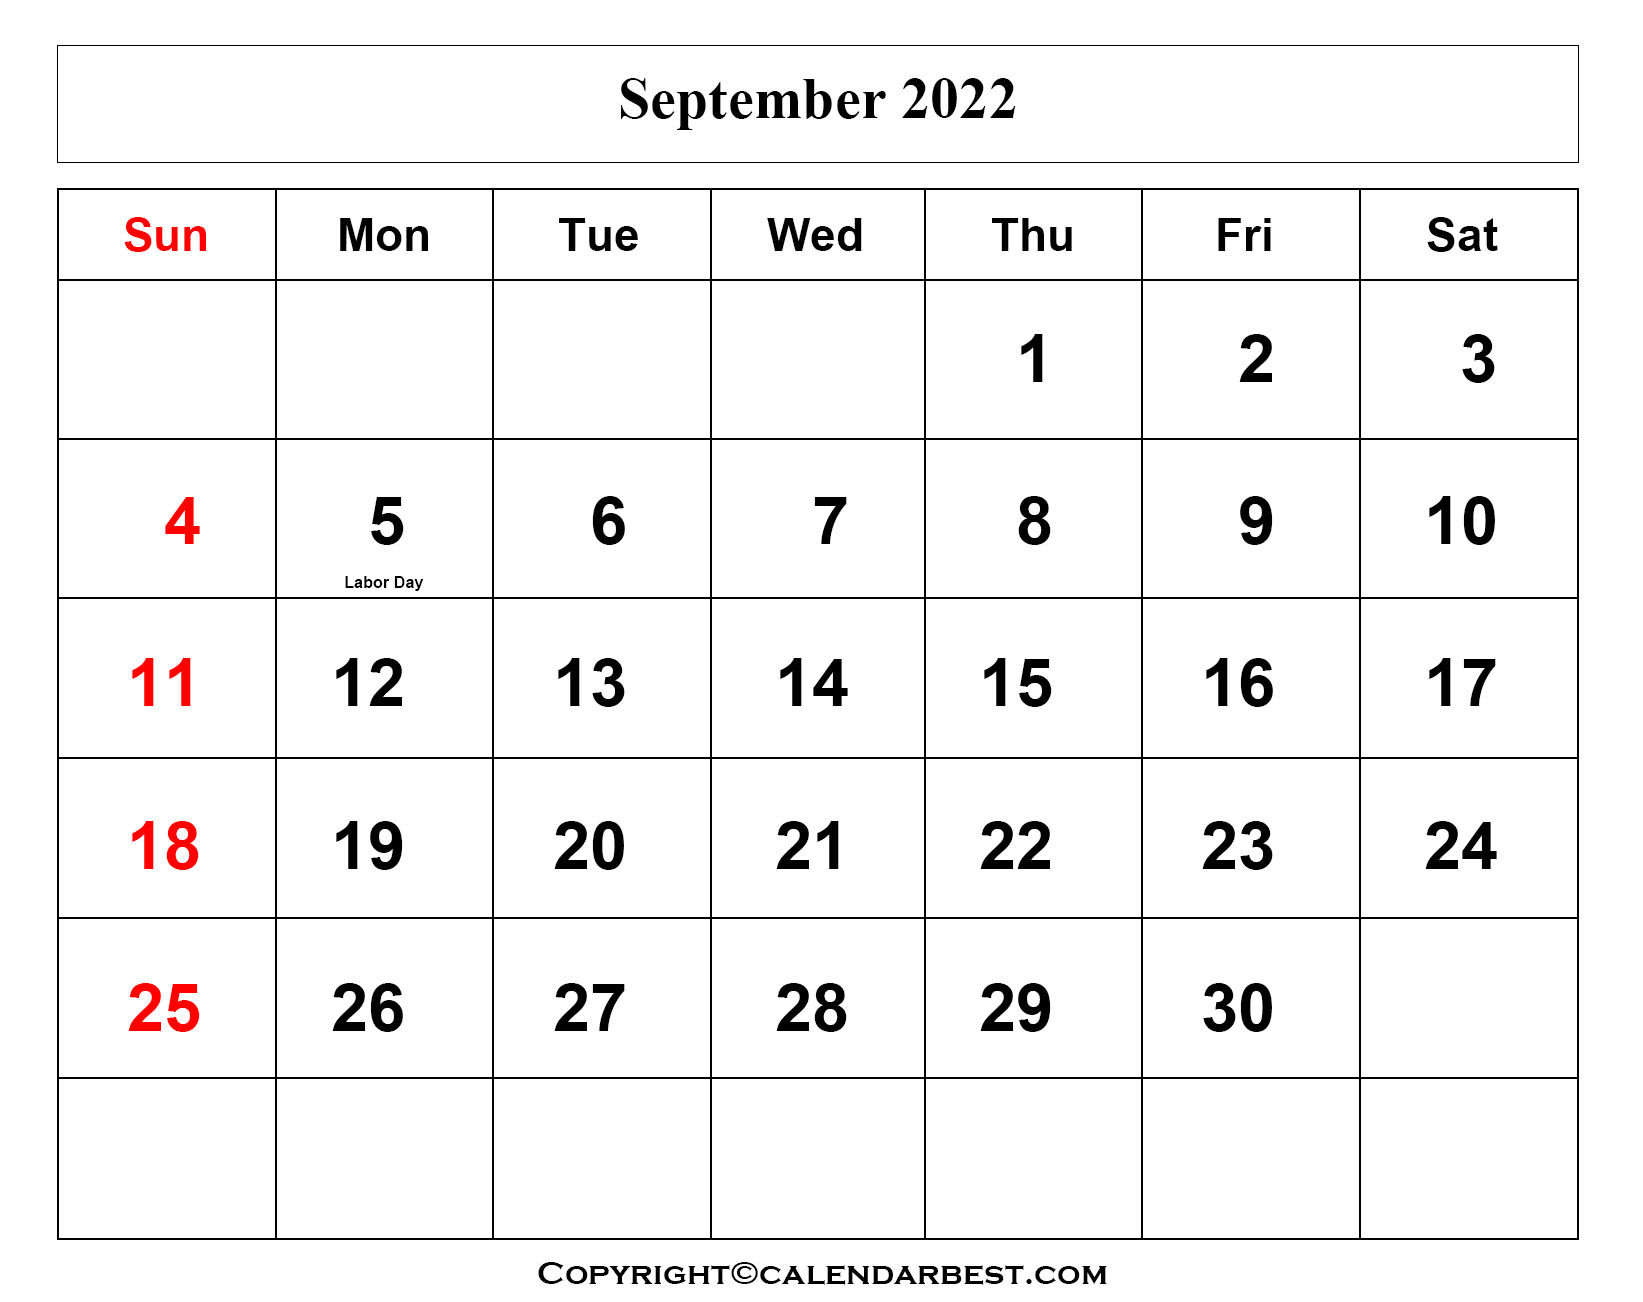 Free Printable September Calendar 2022 with Holidays